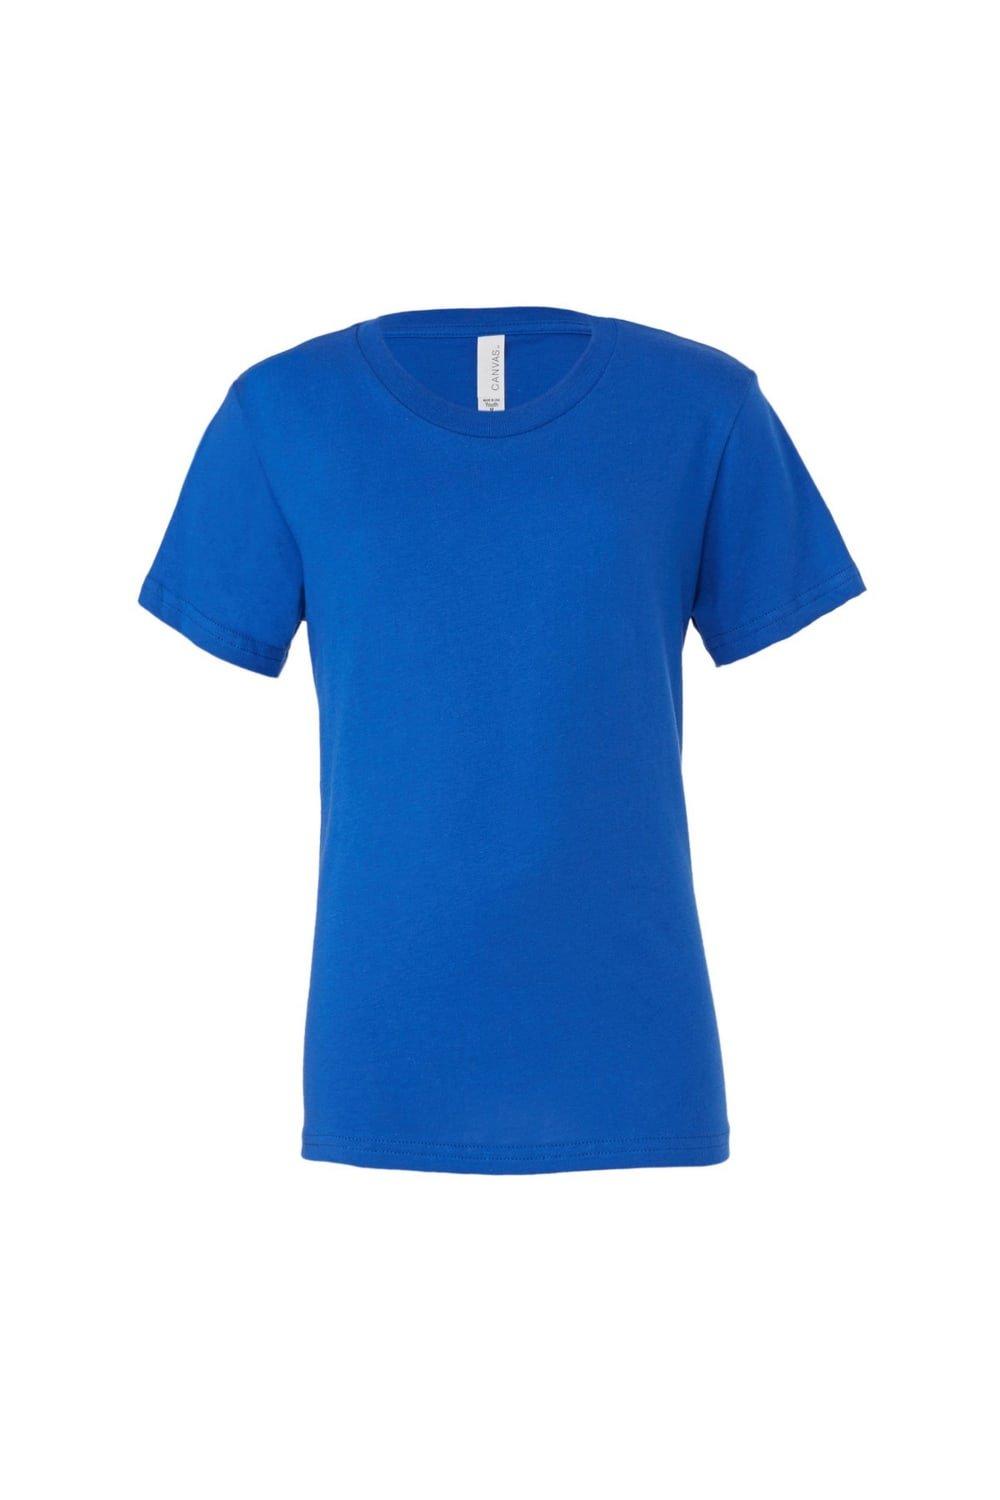 Молодежная футболка из джерси с короткими рукавами Bella + Canvas, синий молодежная футболка из джерси с короткими рукавами bella canvas темно синий